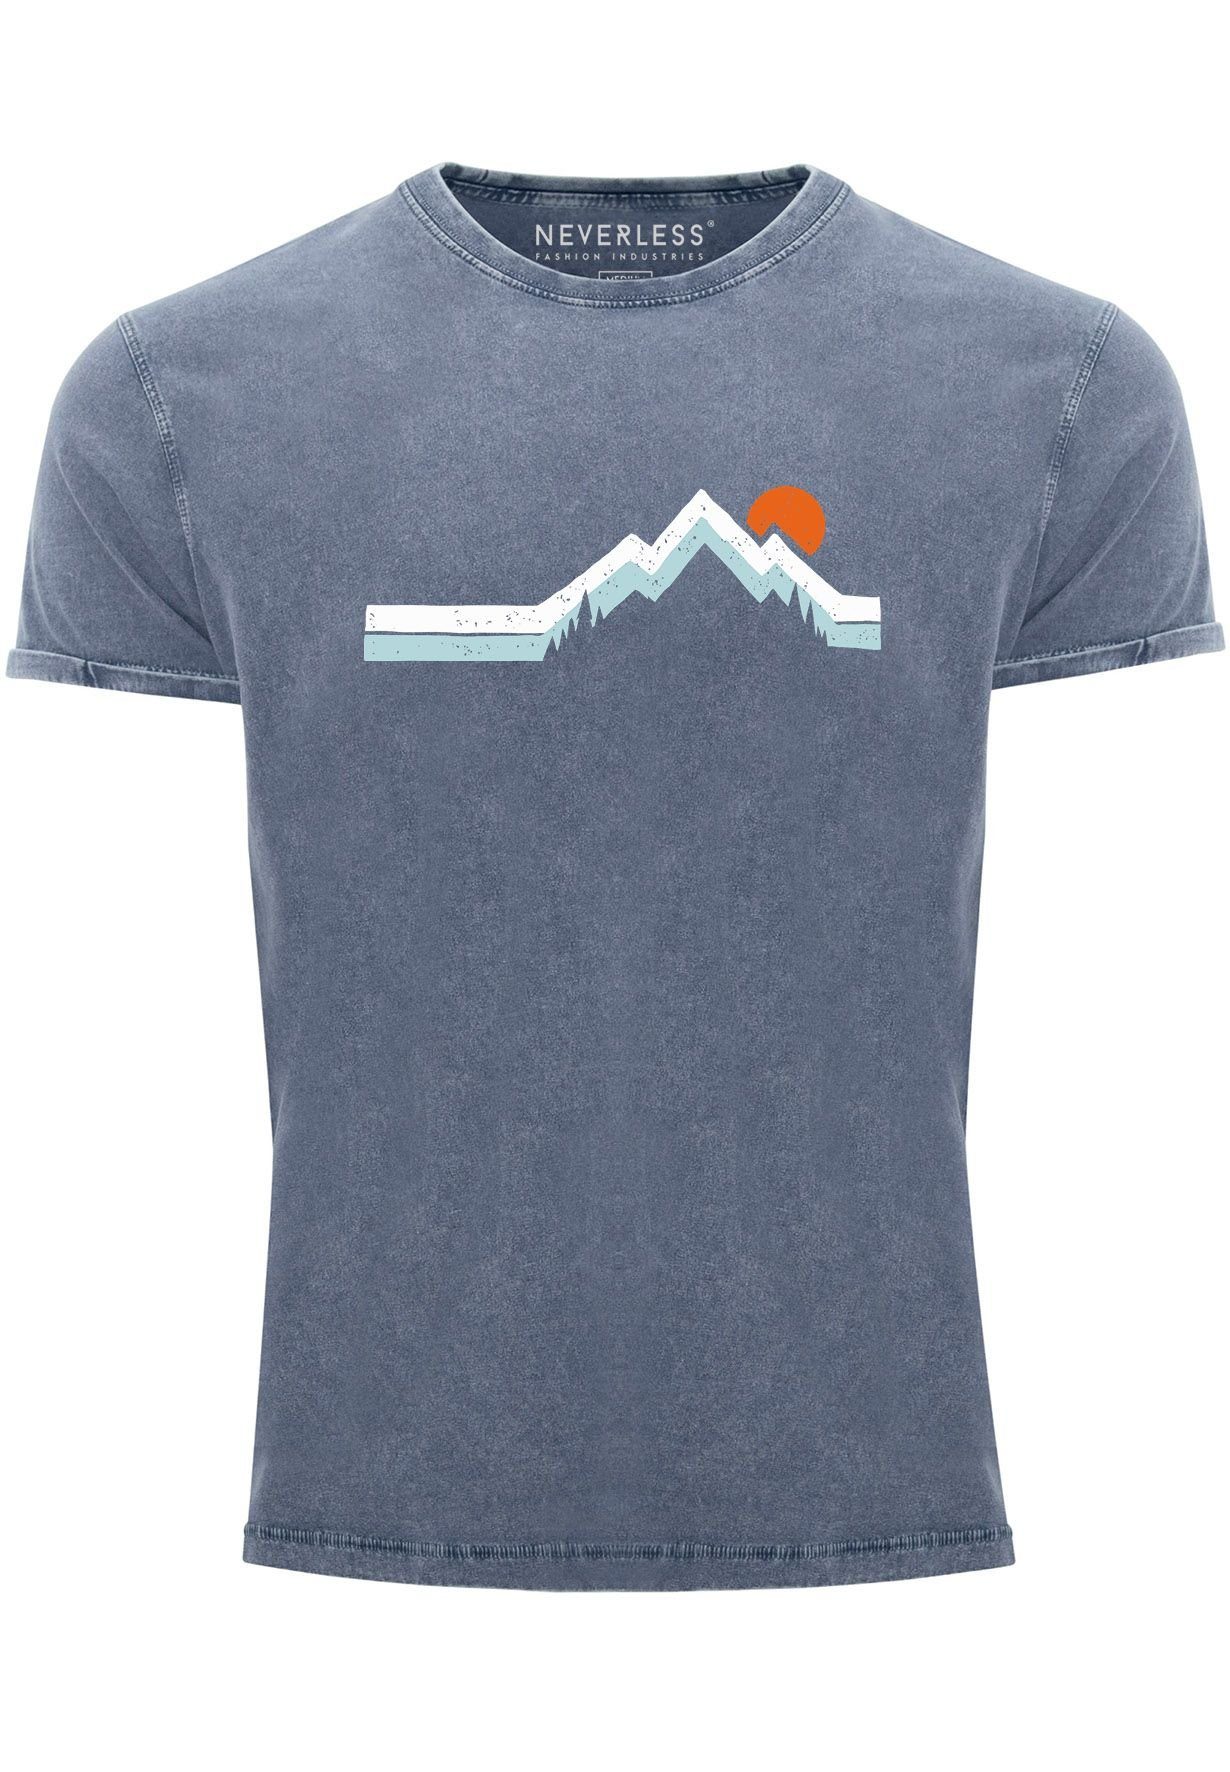 Printshirt Wandern T-Shirt mit Auf Print-Shirt Berg Vintage-Shirt Print Natur Herren Neverless Outdoor